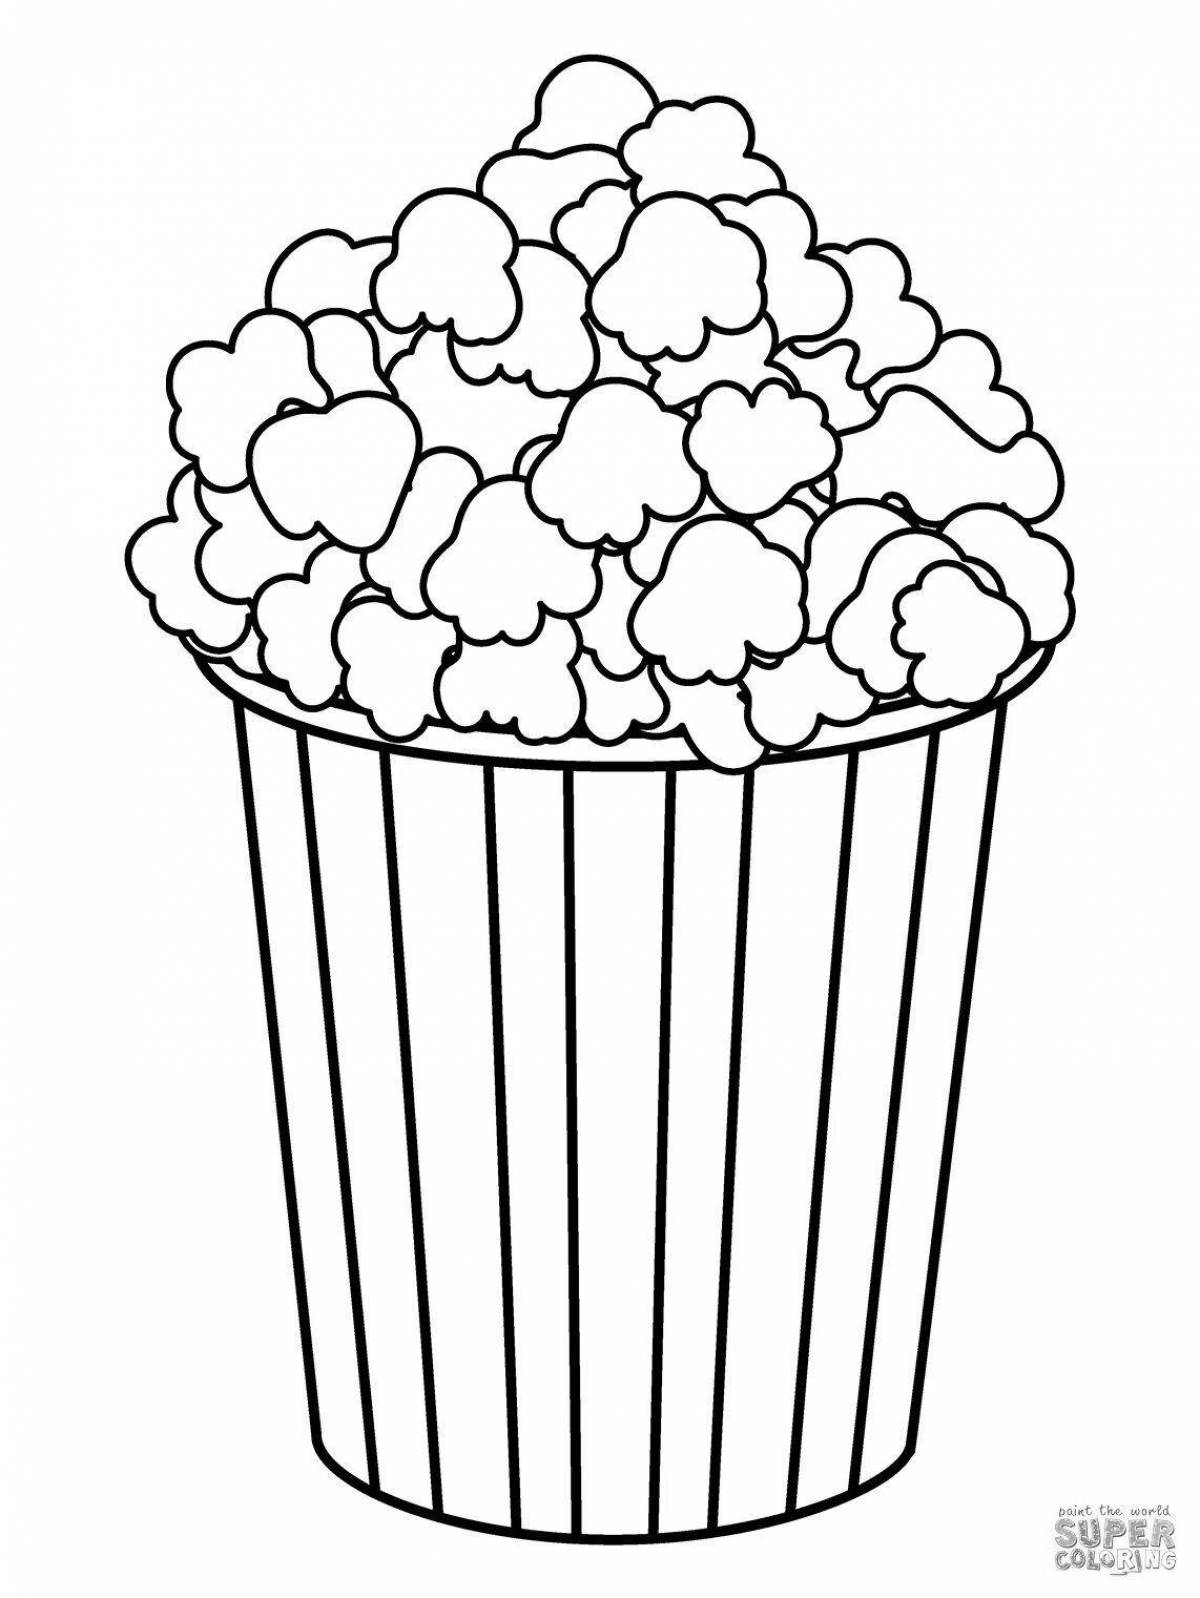 Children's popcorn #3